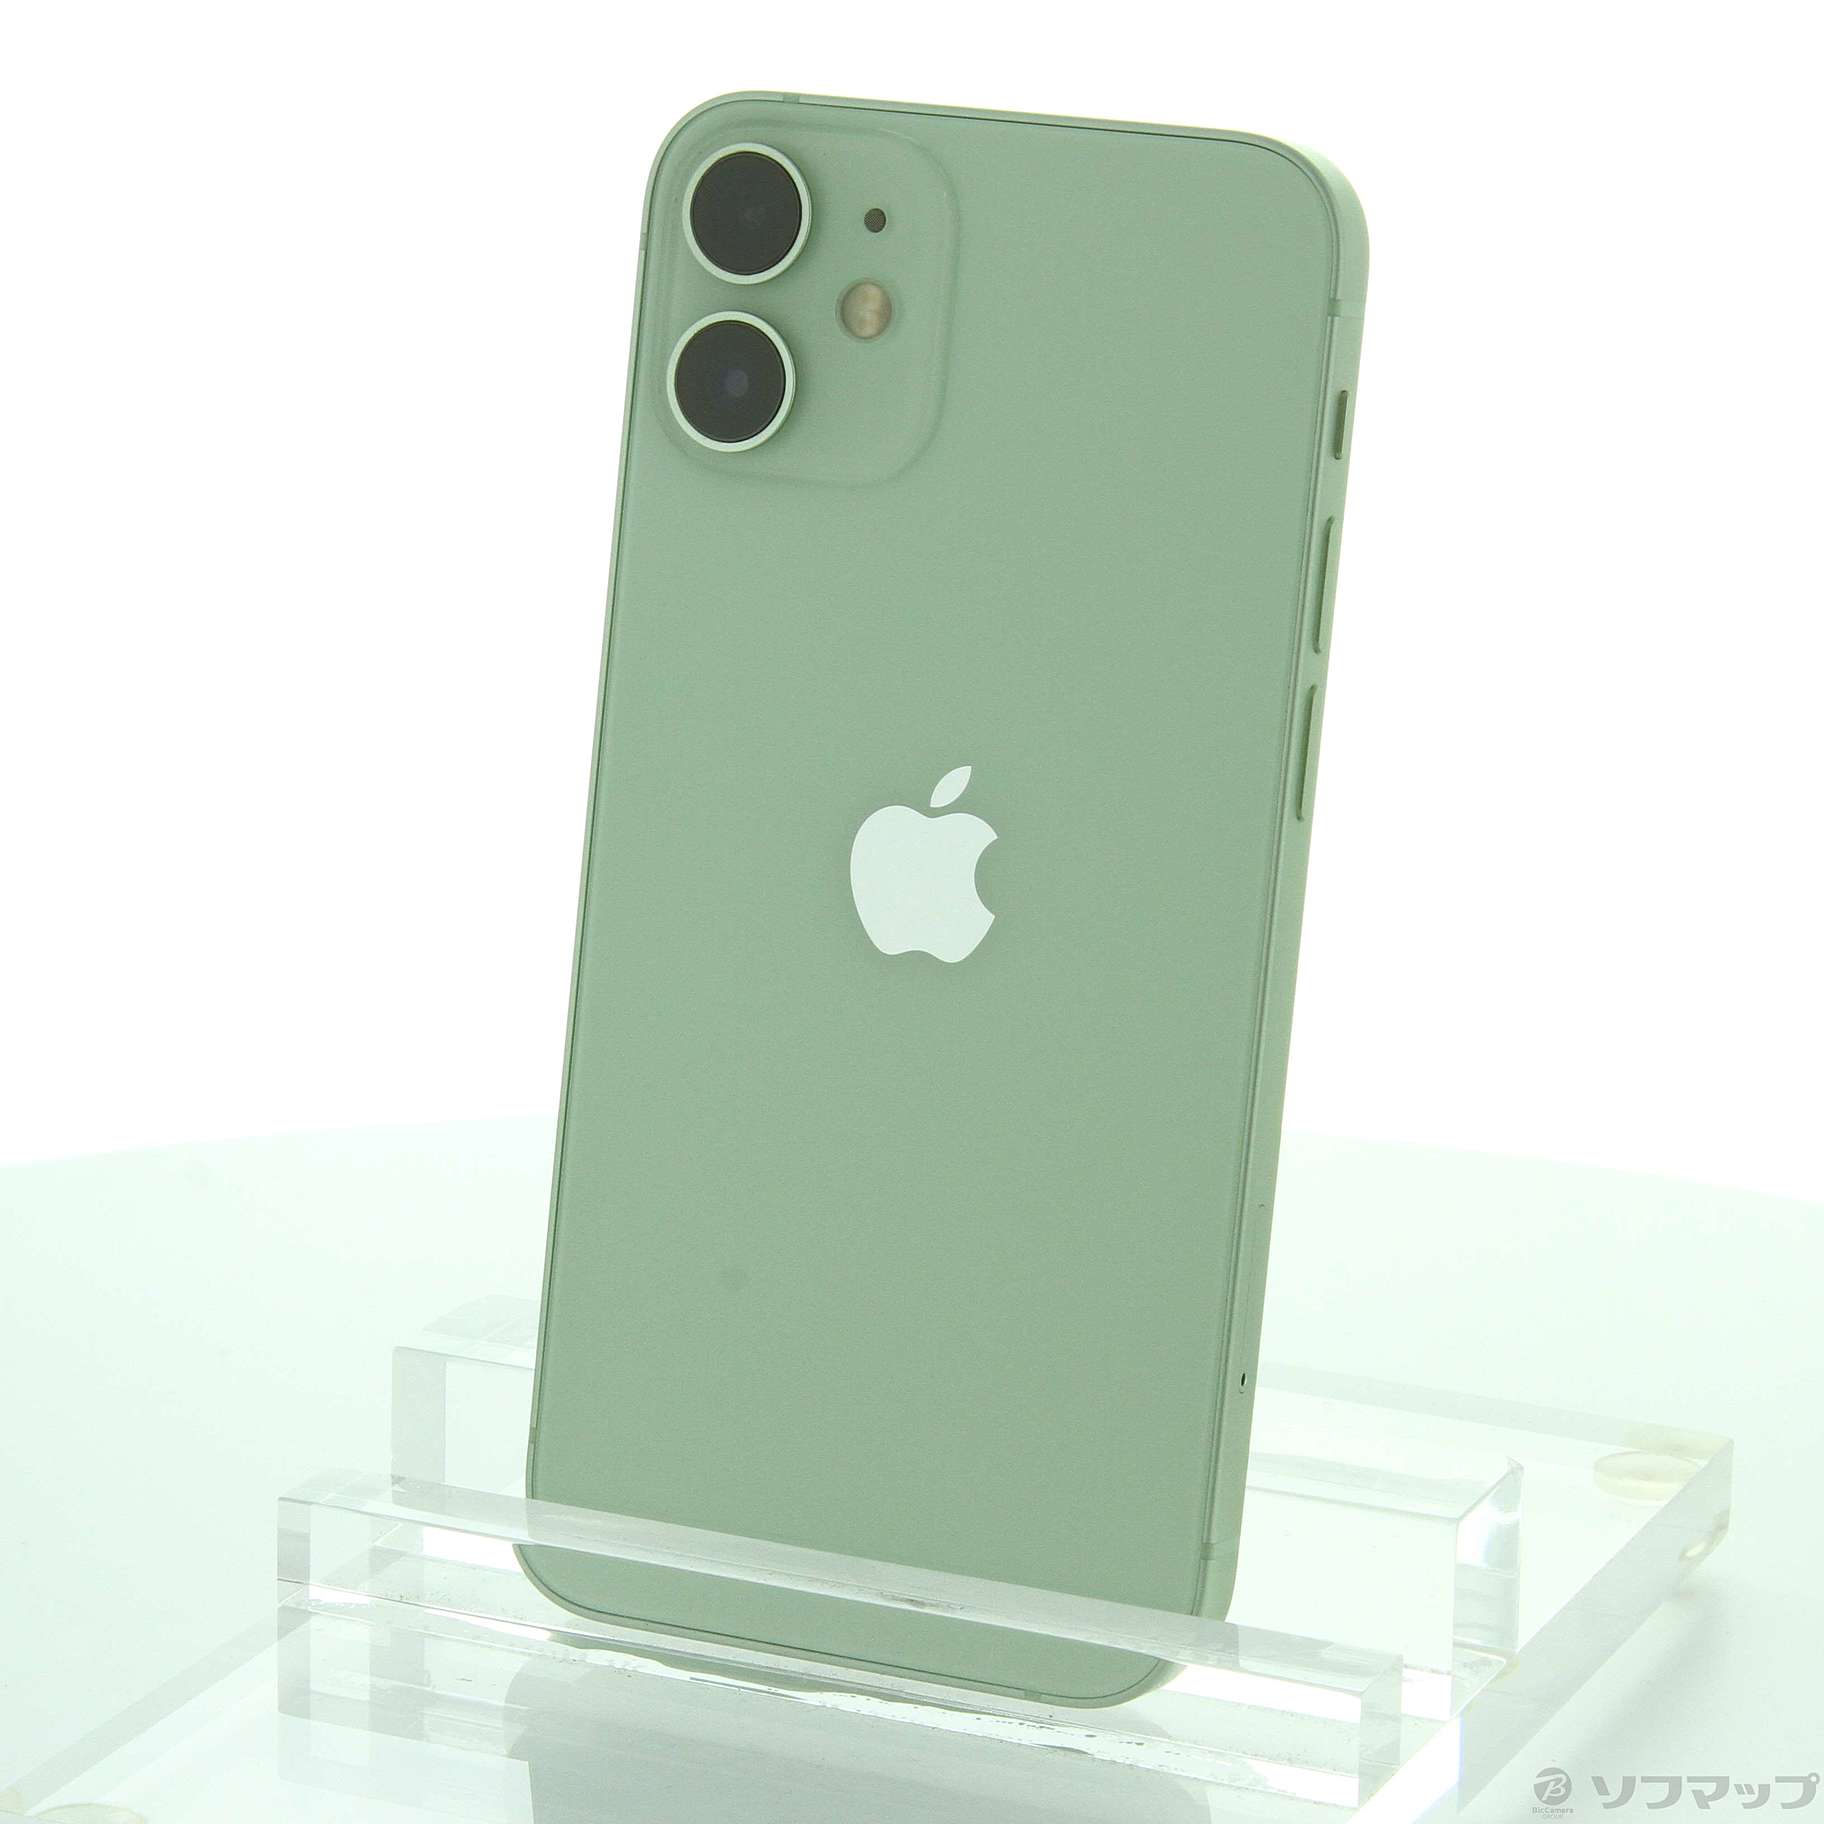 iPhone12 mini 128GB green 緑 新品 SIMフリー